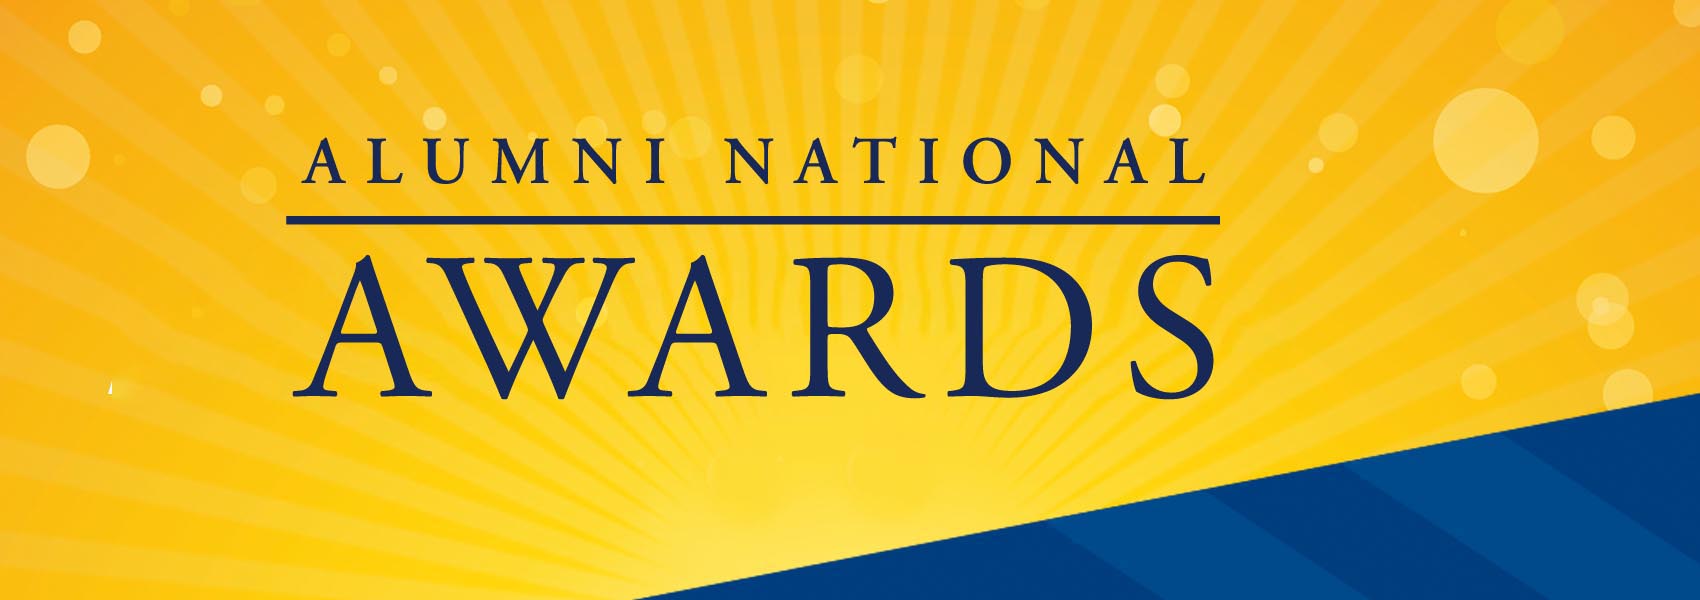 Alumni National Awards